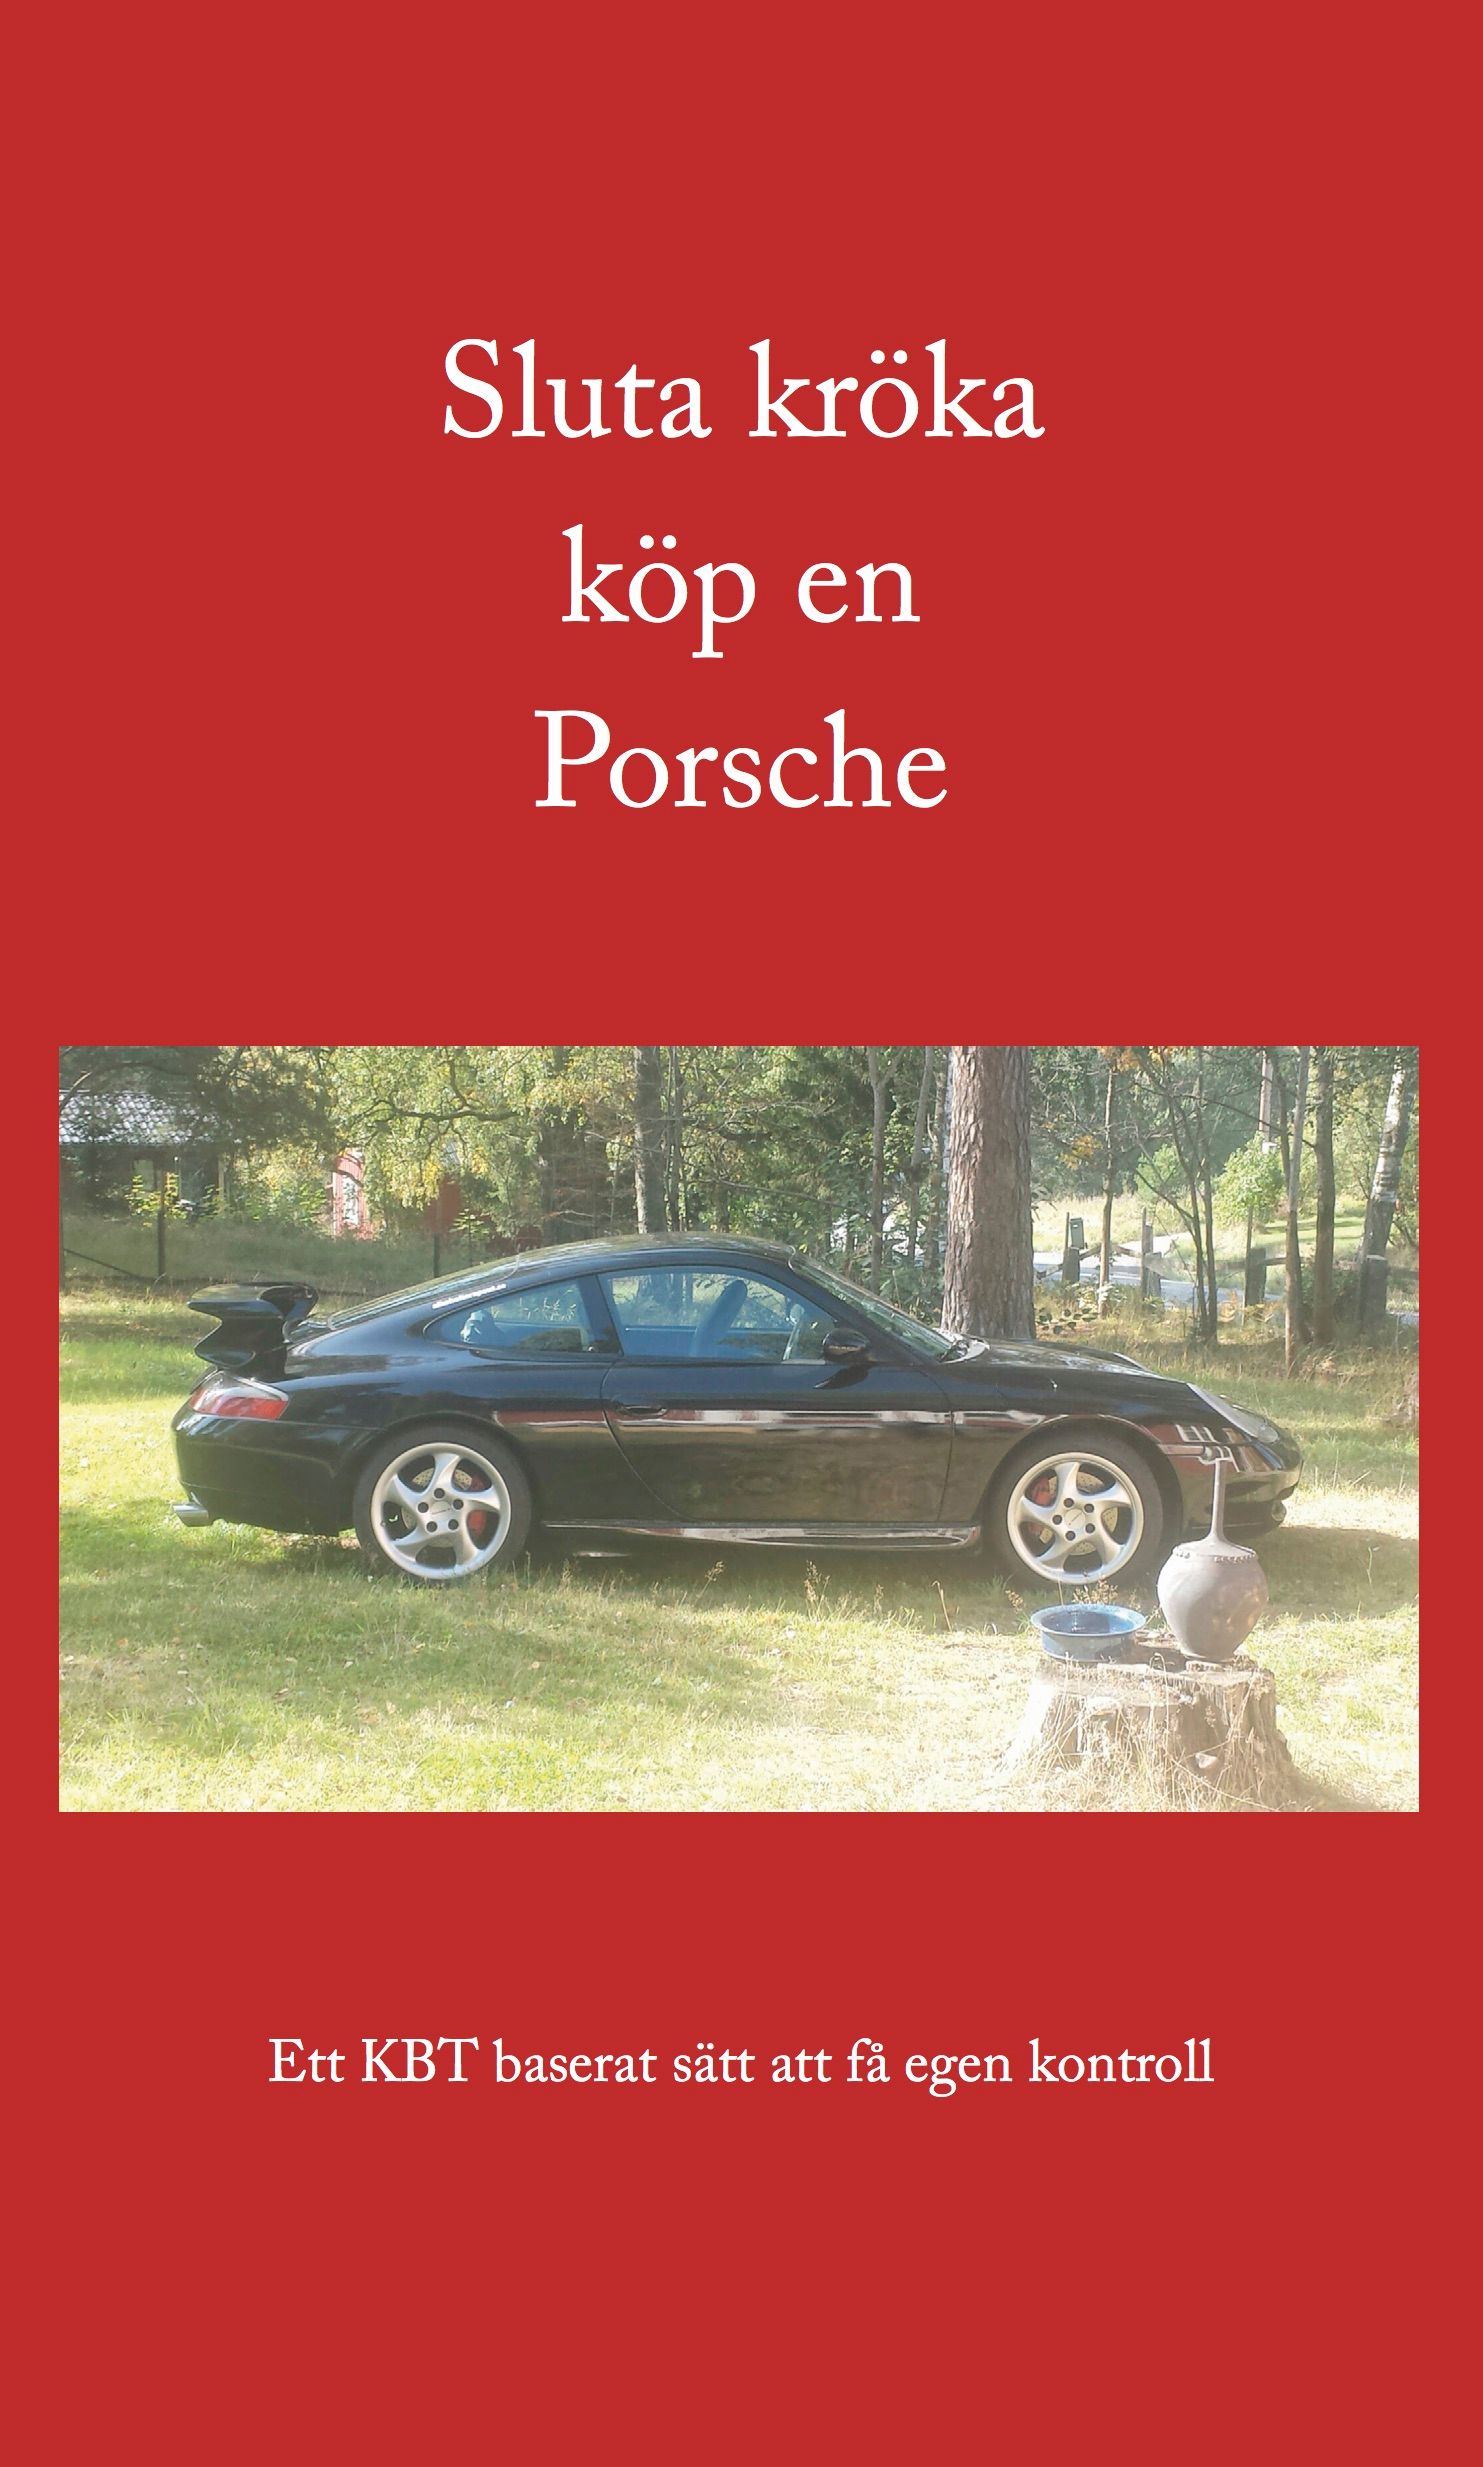 Sluta kröka köp en Porsche, e-bog af Isak Isaksson